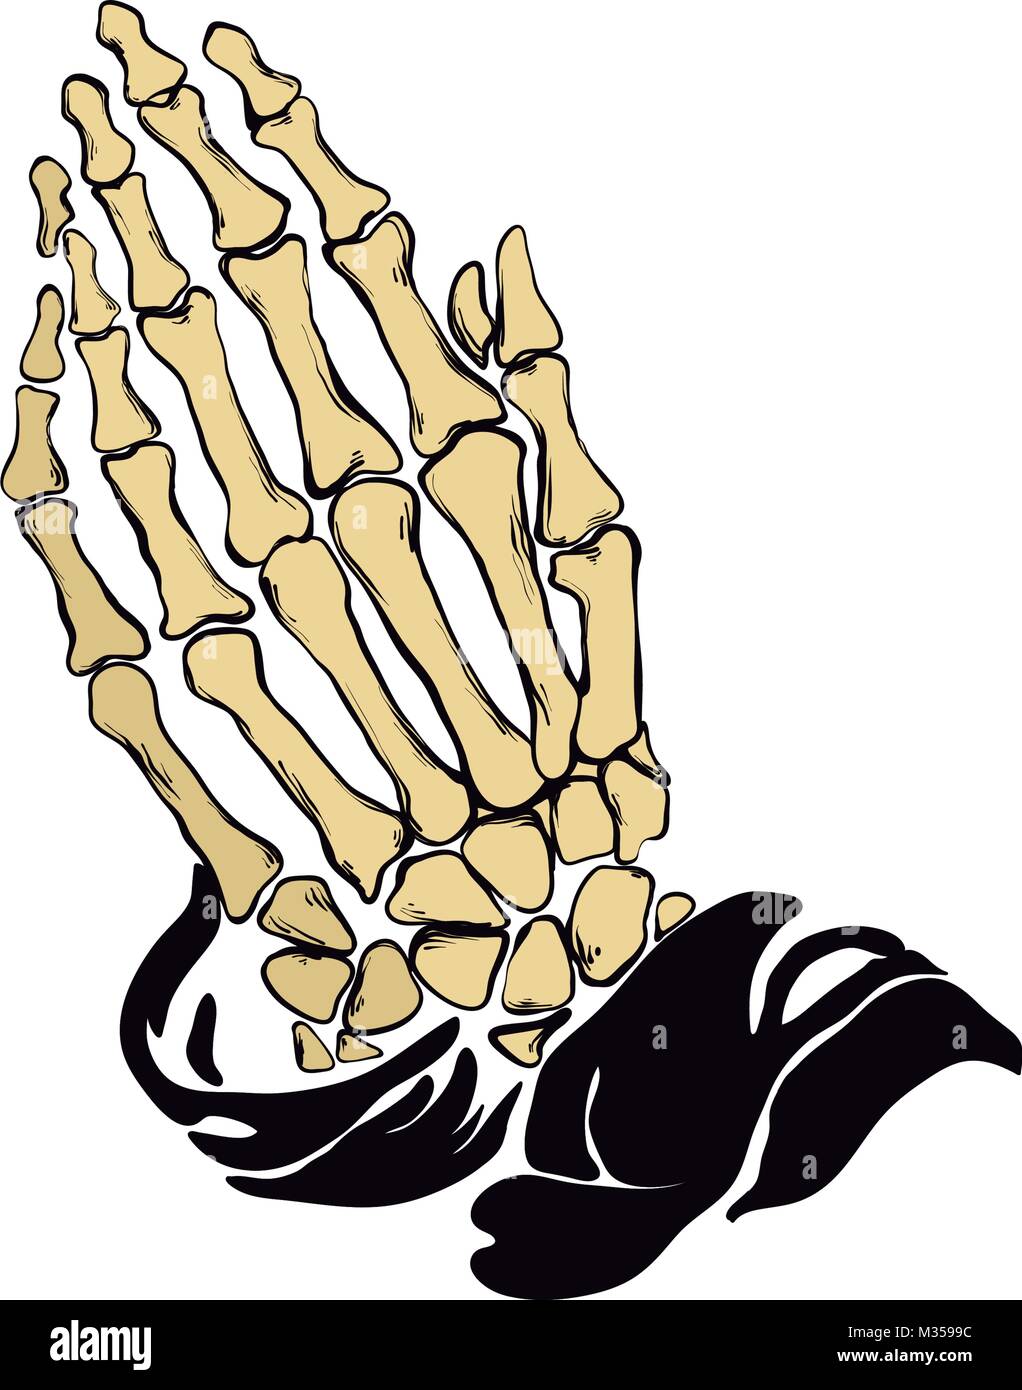 Vector illustration - Praying skeleton hands Stock Vector